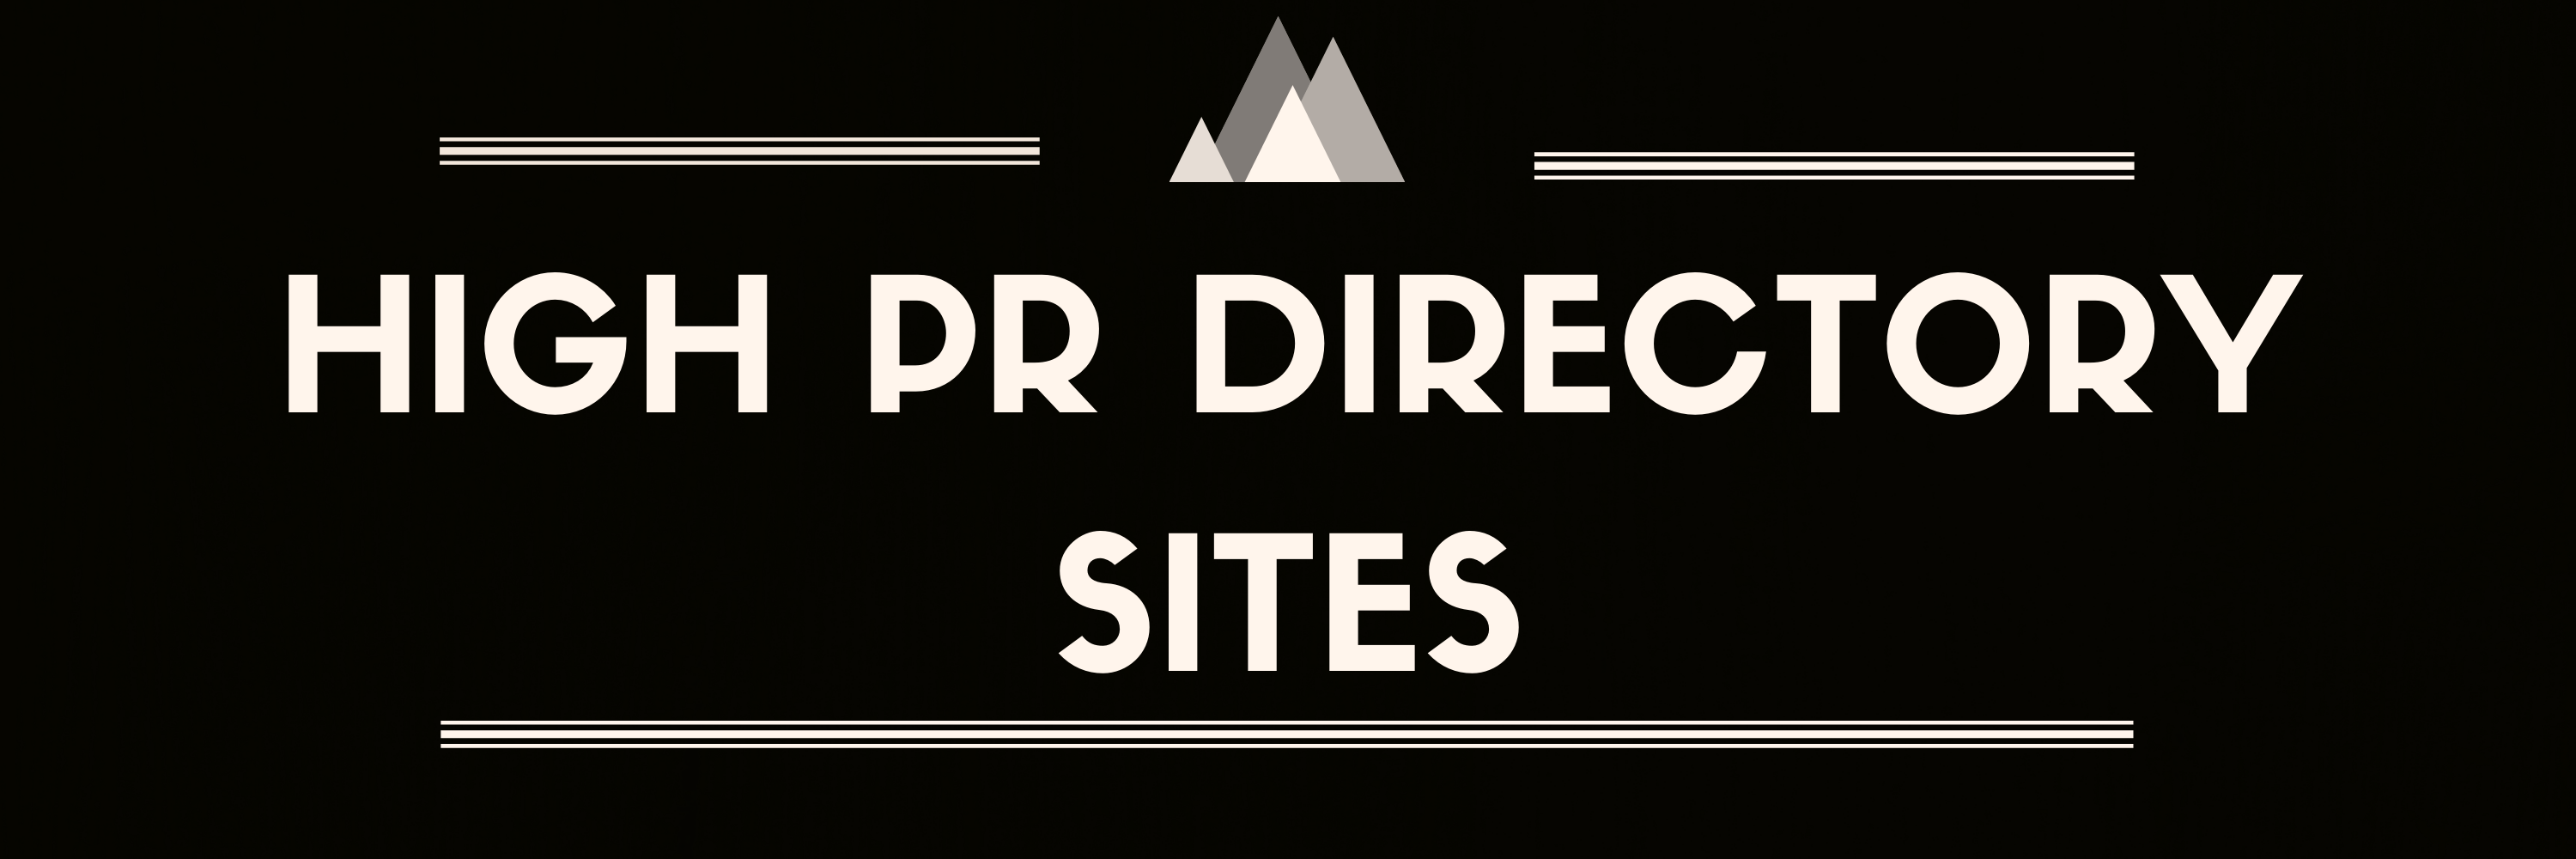 High-PR-Directory-Sites-1.png